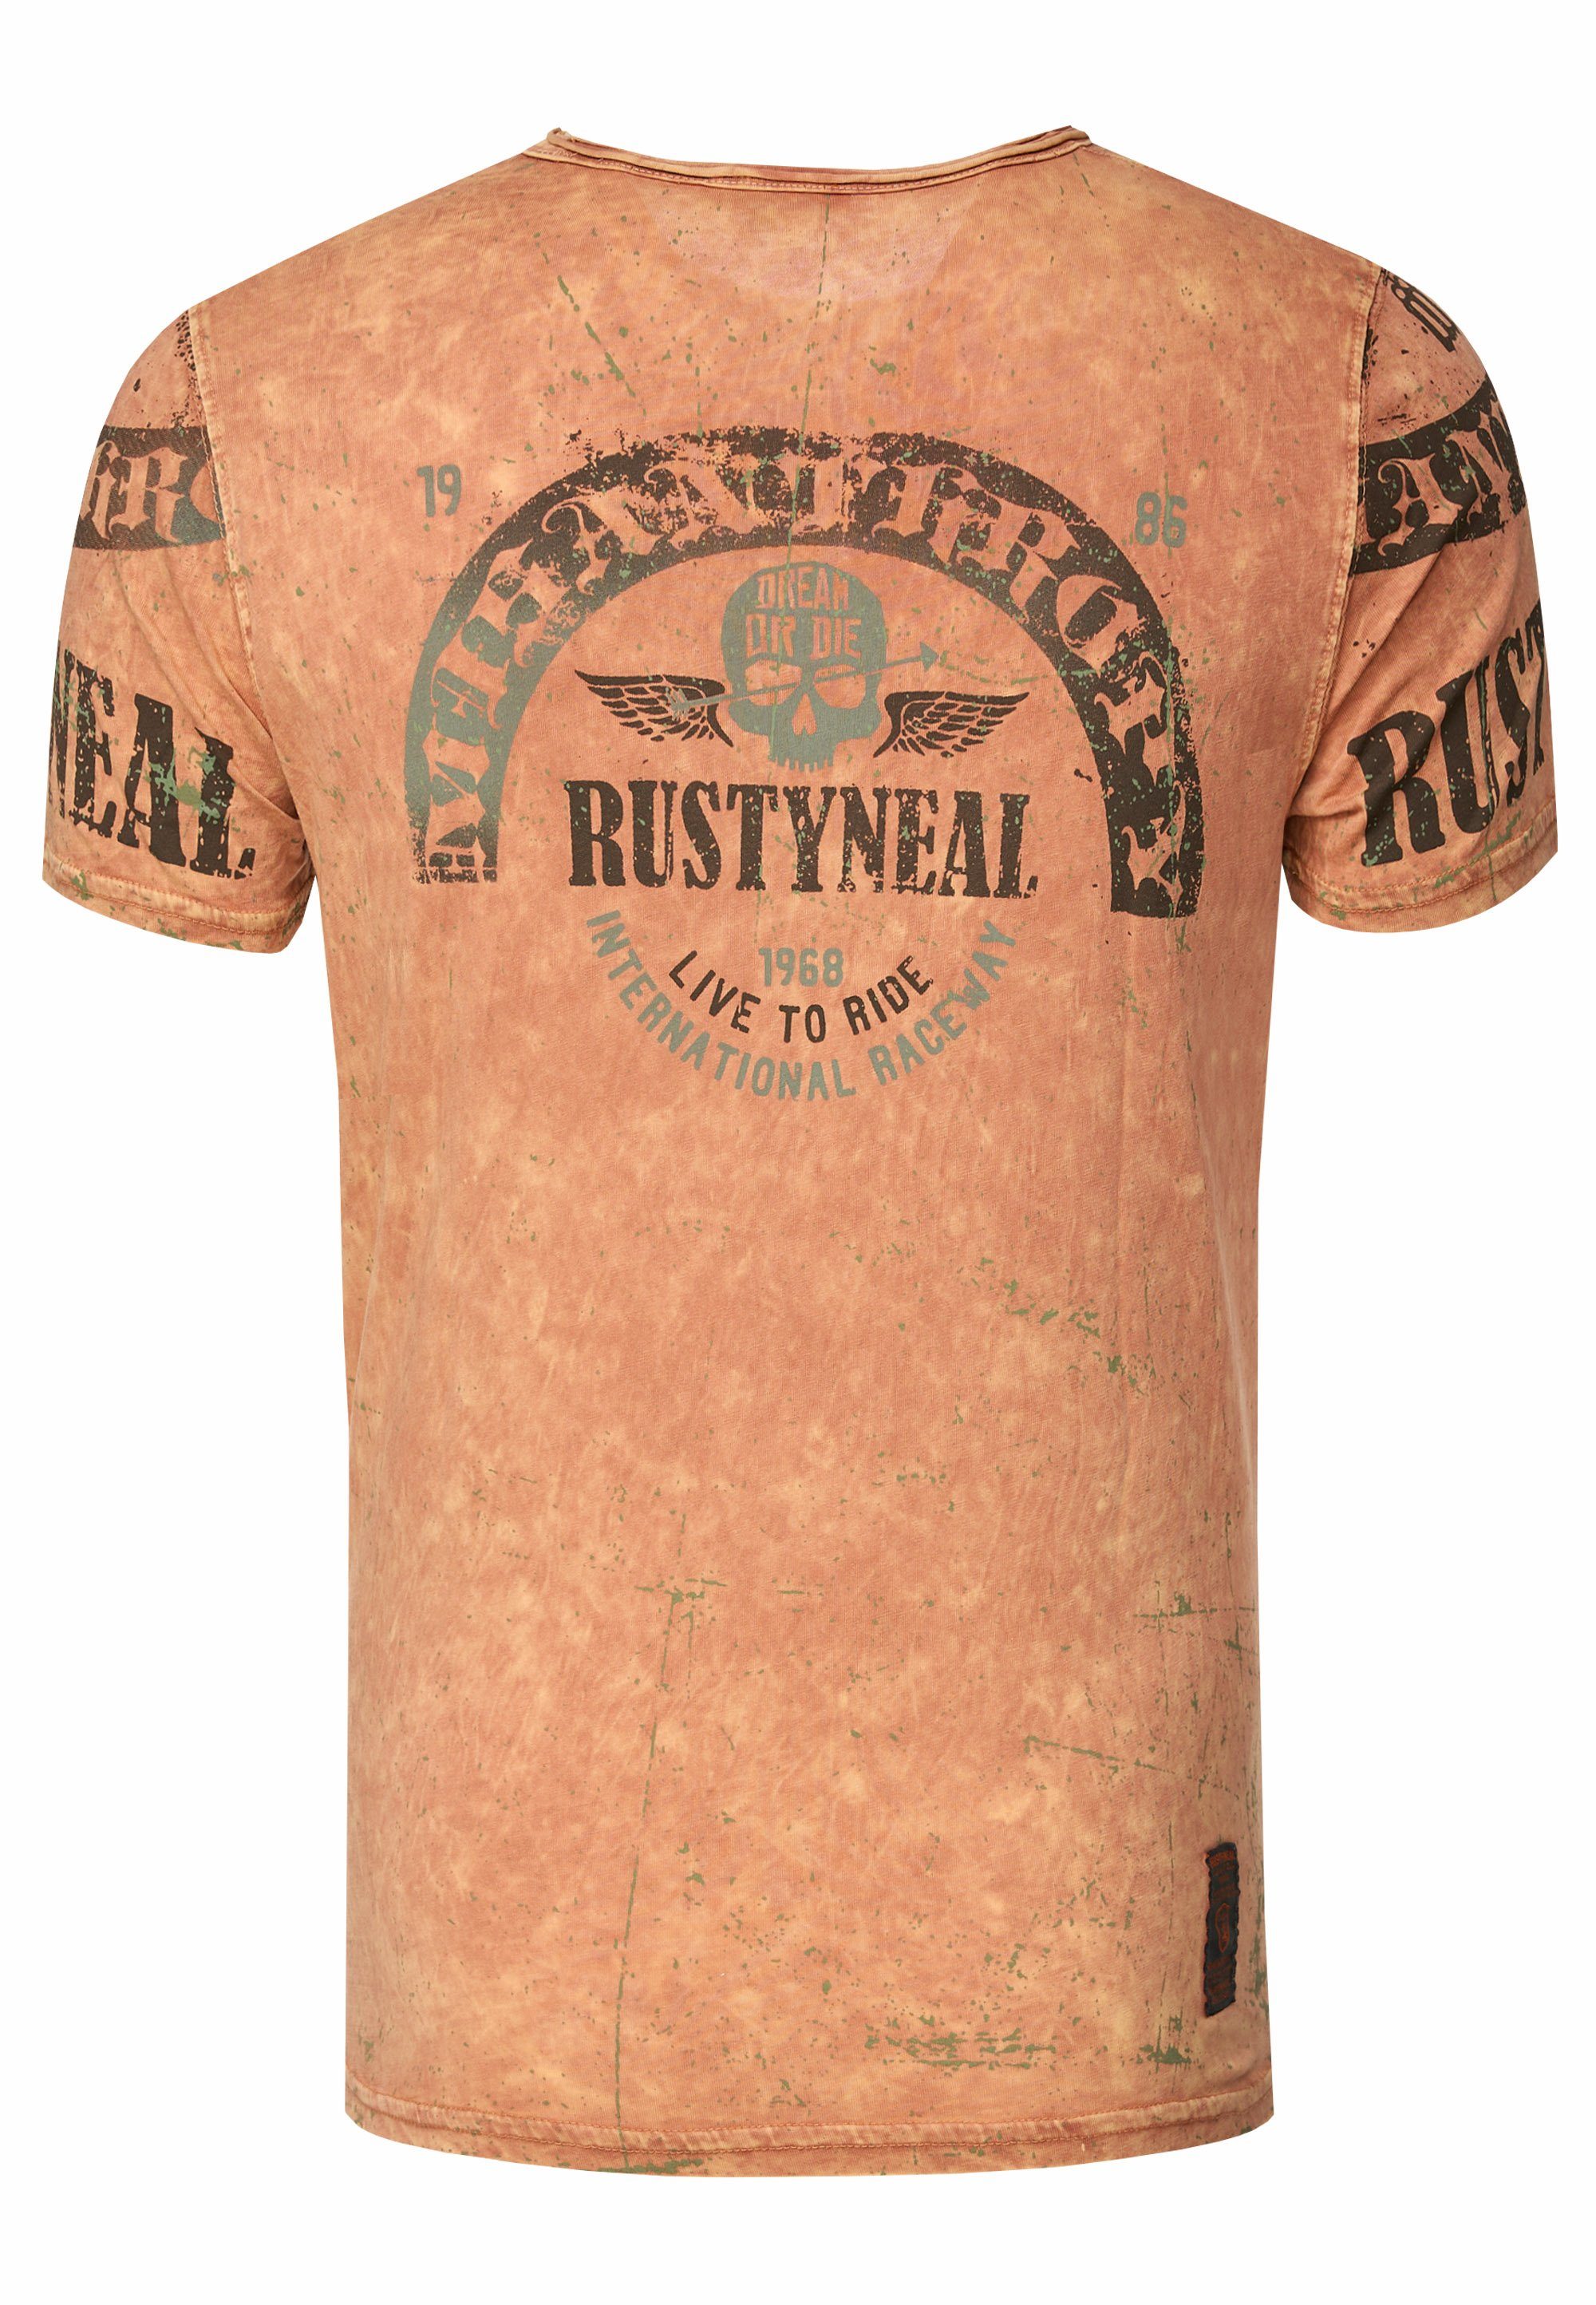 camelfarben Markenprint mit T-Shirt Neal Rusty